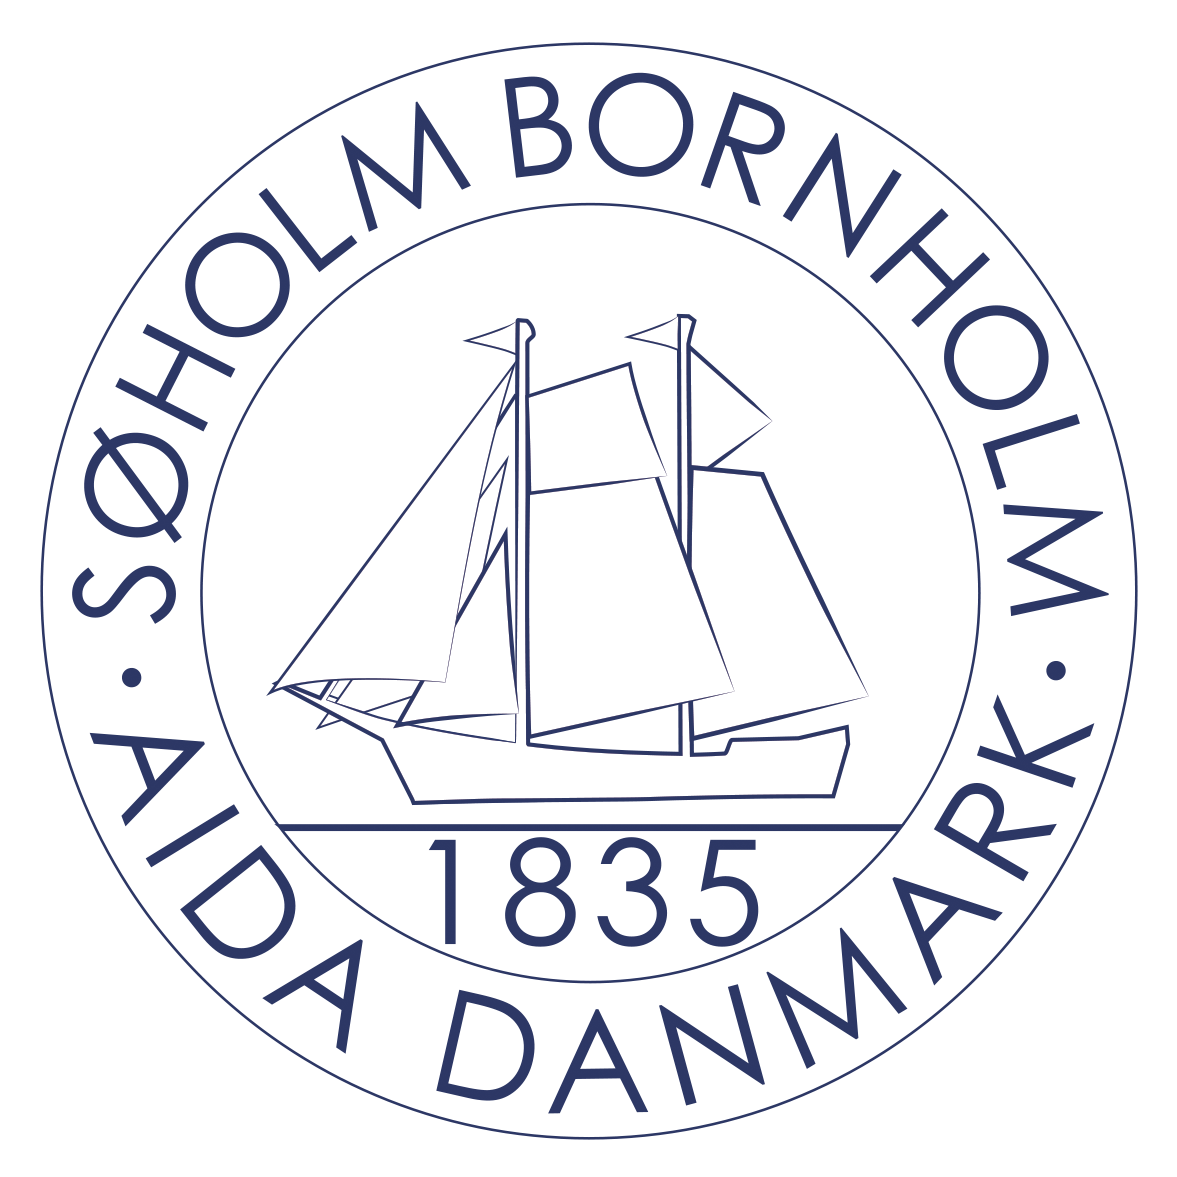 Søholm